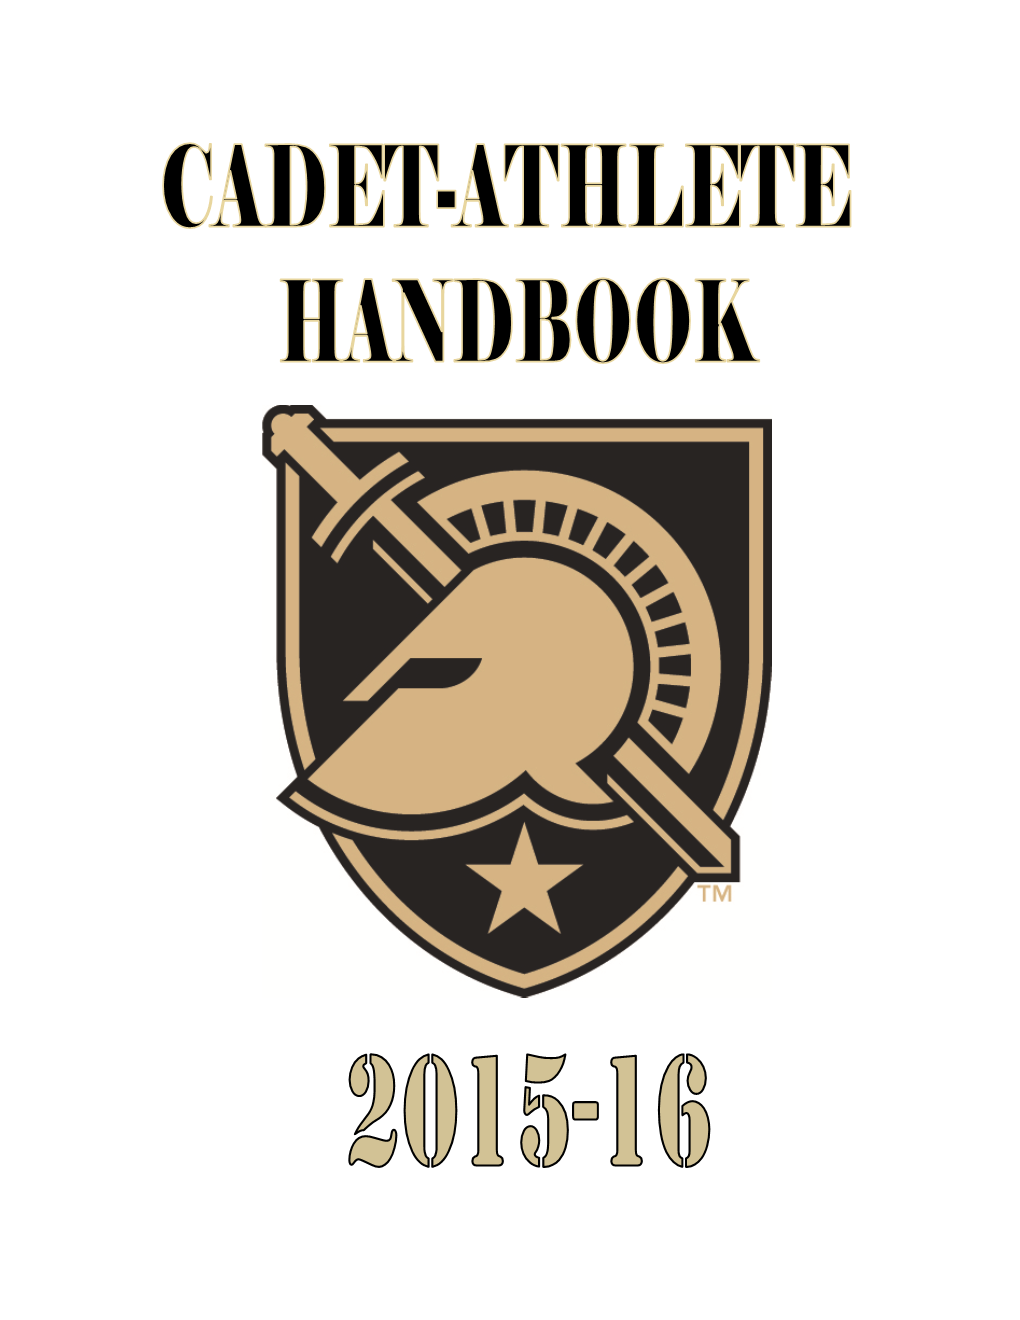 Cadet-Athlete Handbook